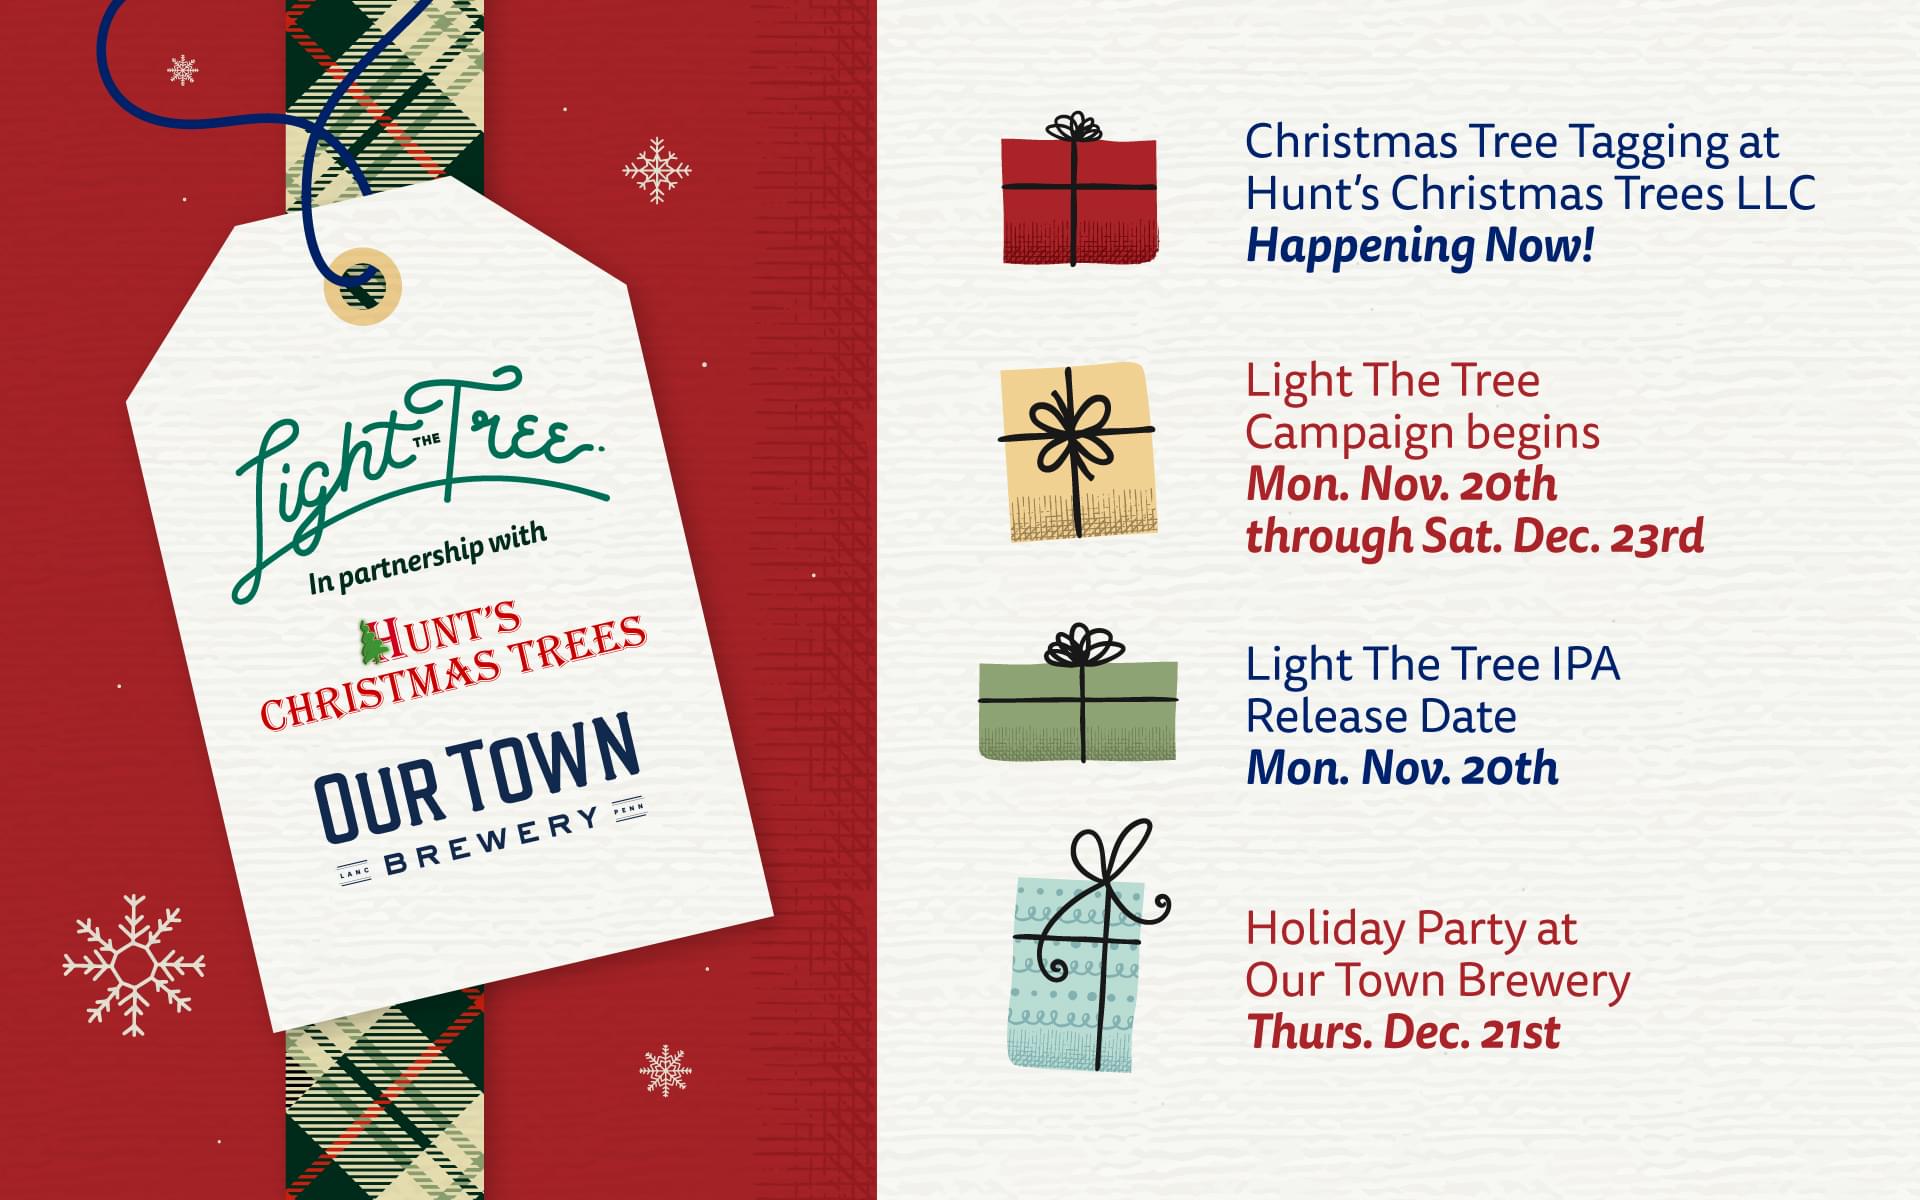 Light The Three Campgain Begins Mon. Nov 20th through Sat. Dec 23rd. Christmast Tree Tagging at Hunt's Christmas Trees LLC Happening Now!